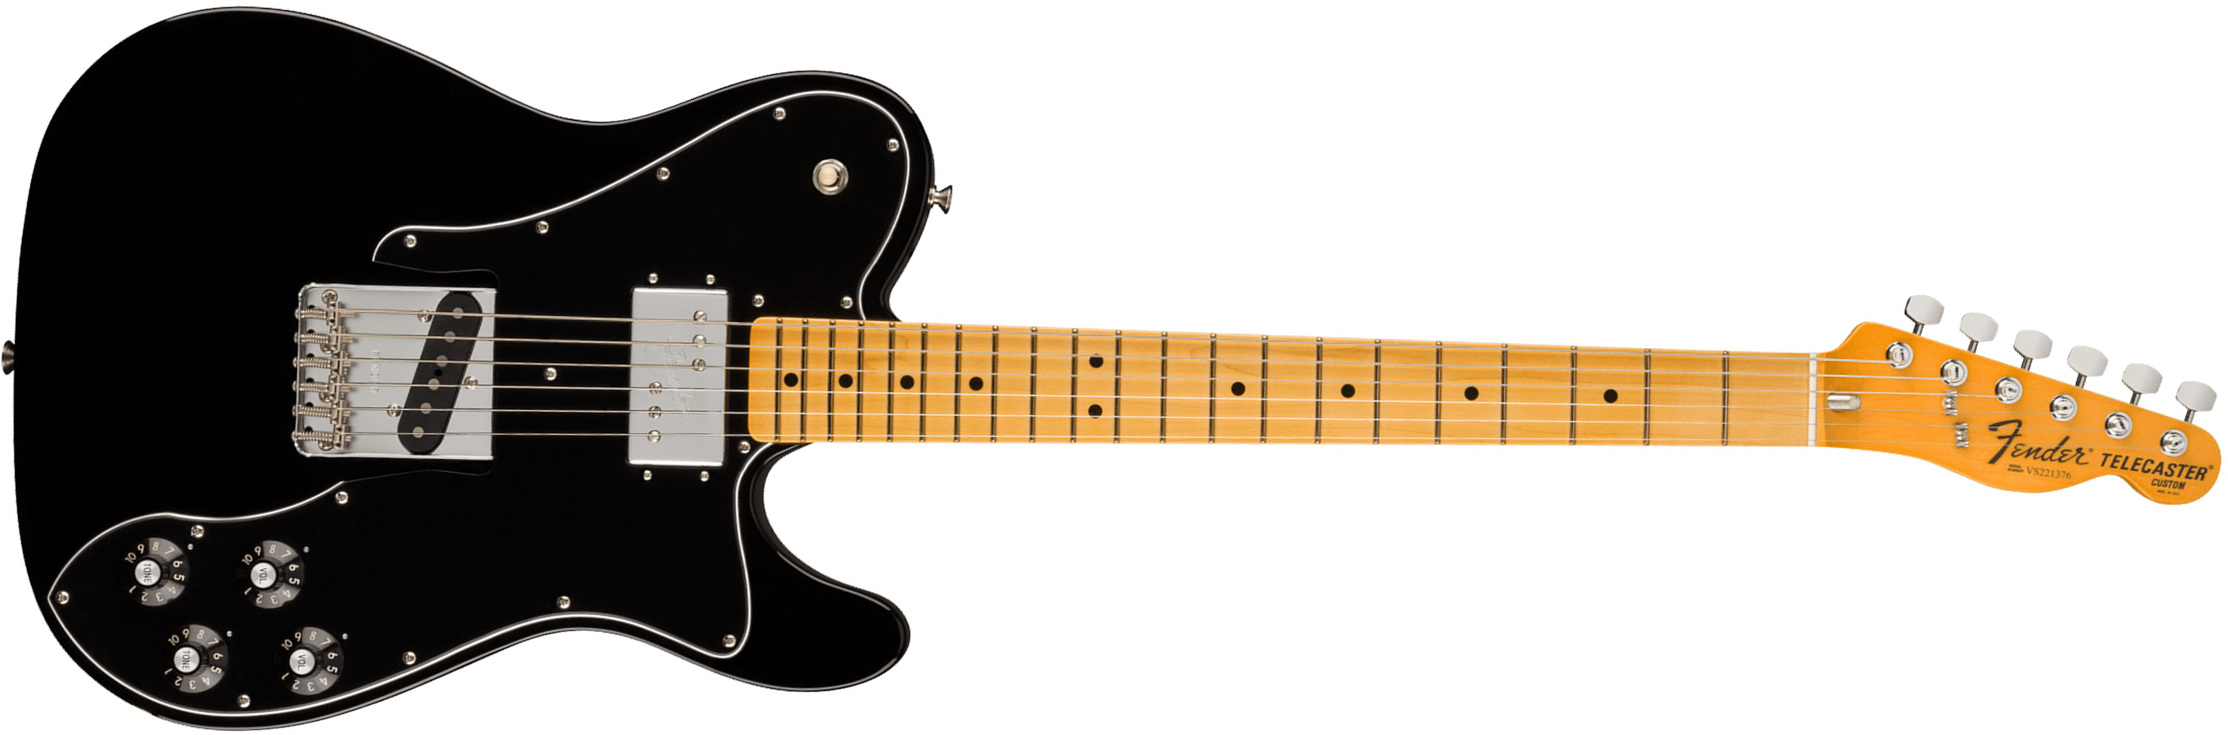 Fender Tele Custom 1977 American Vintage Ii Usa Sh Ht Mn - Black - Televorm elektrische gitaar - Main picture